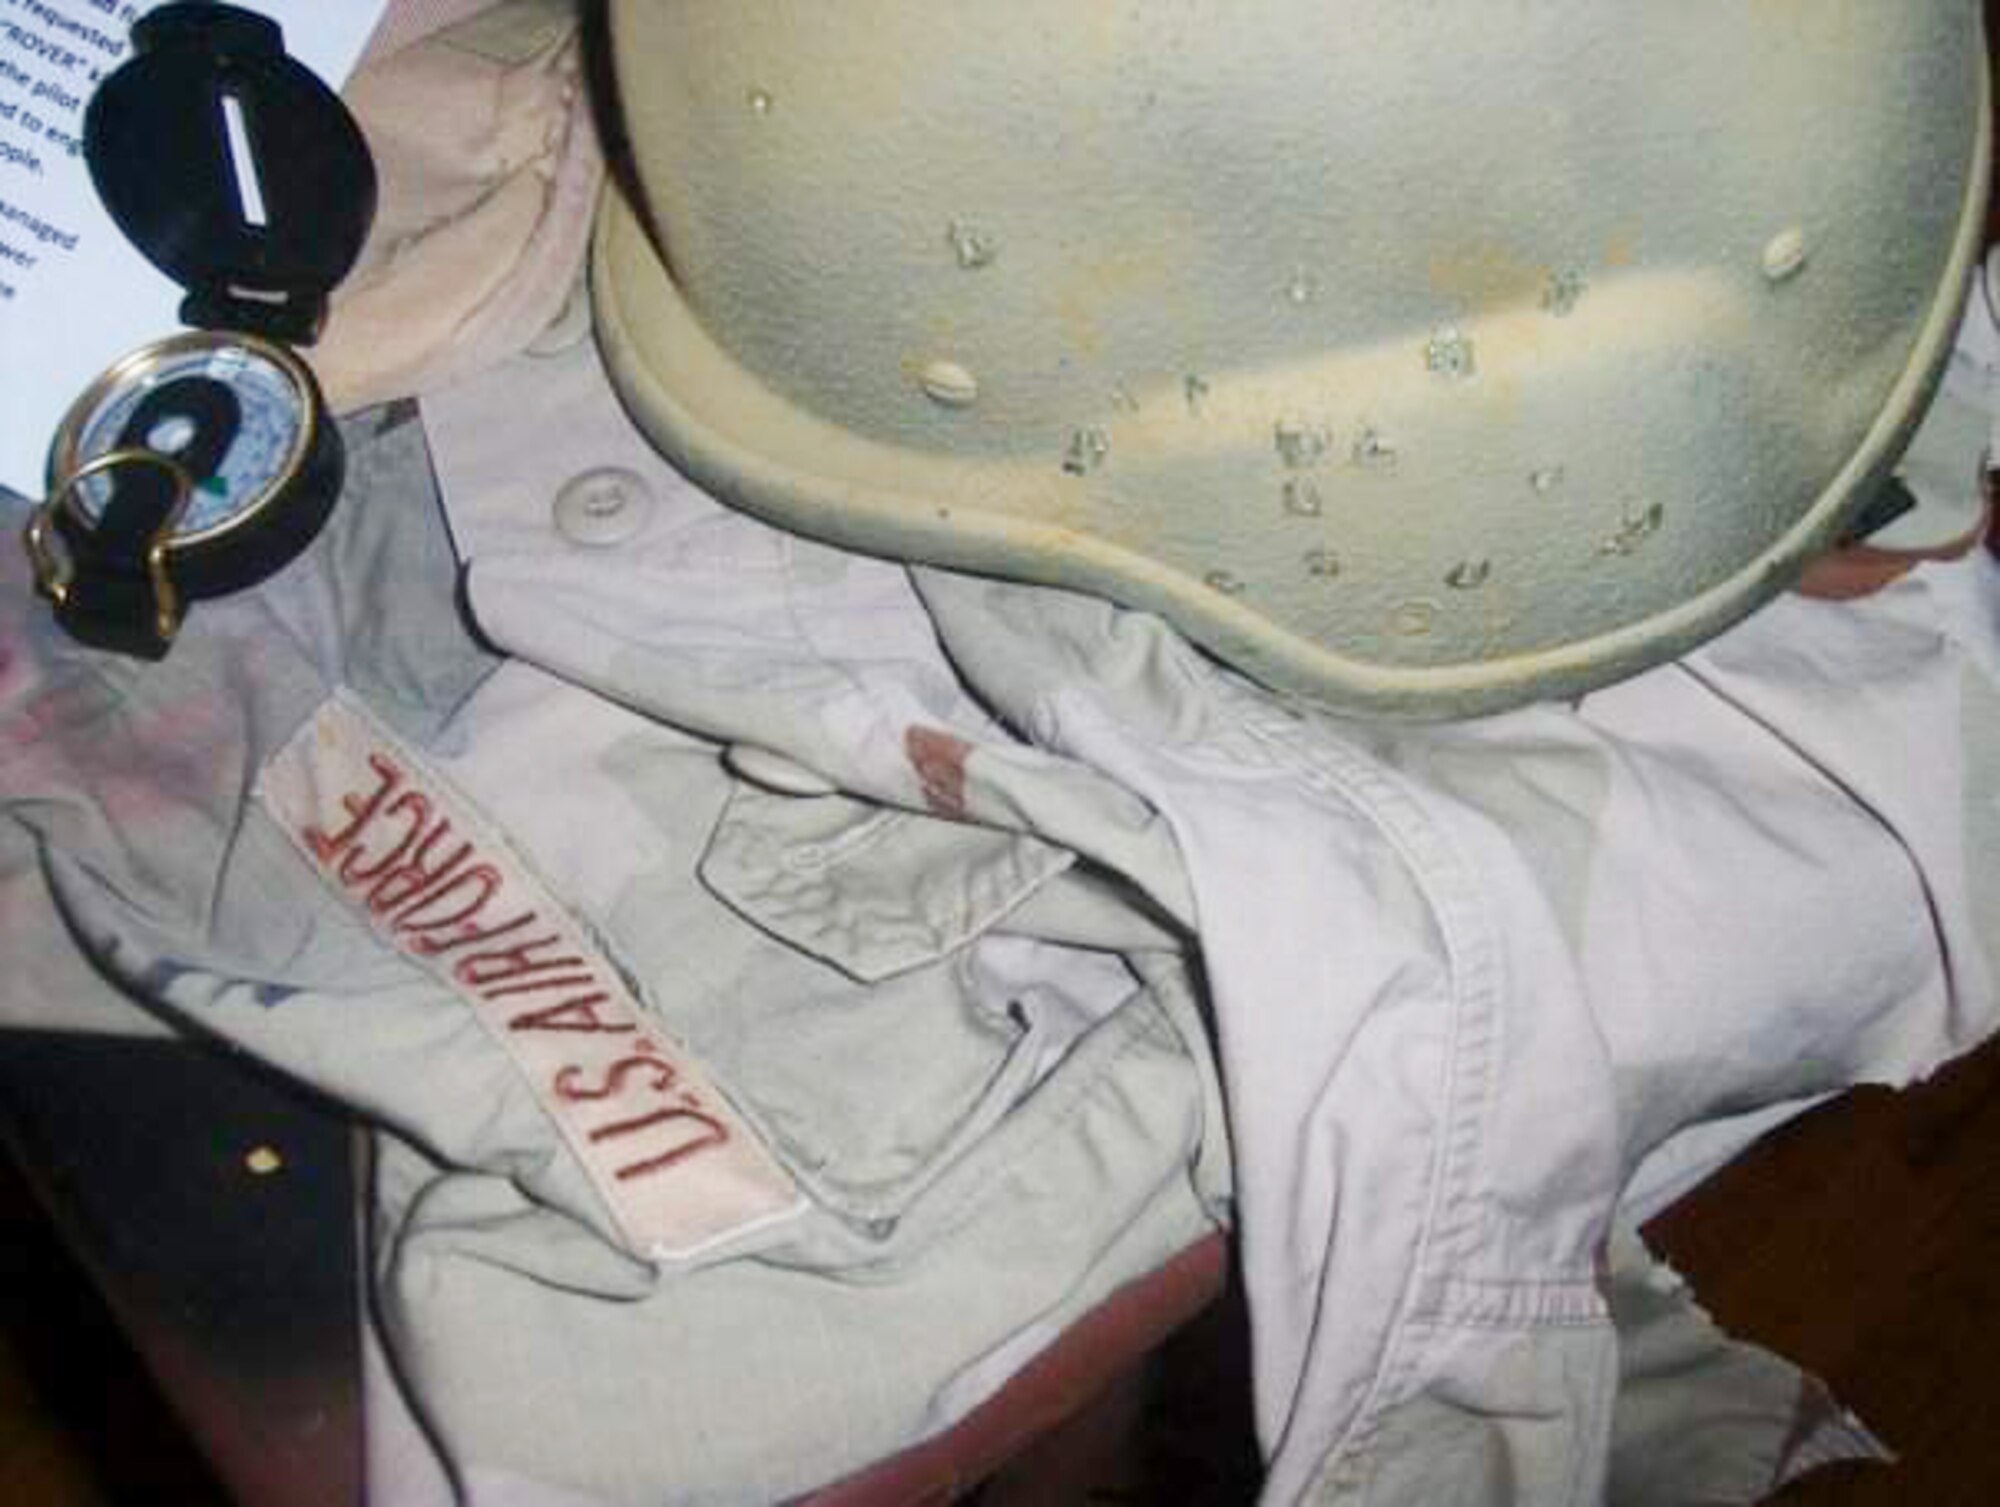 Lt. Col. Greg Harbin's helmet and uniform after the rocket-propelled grenade attack in Afghanistan. (Courtesy photo)